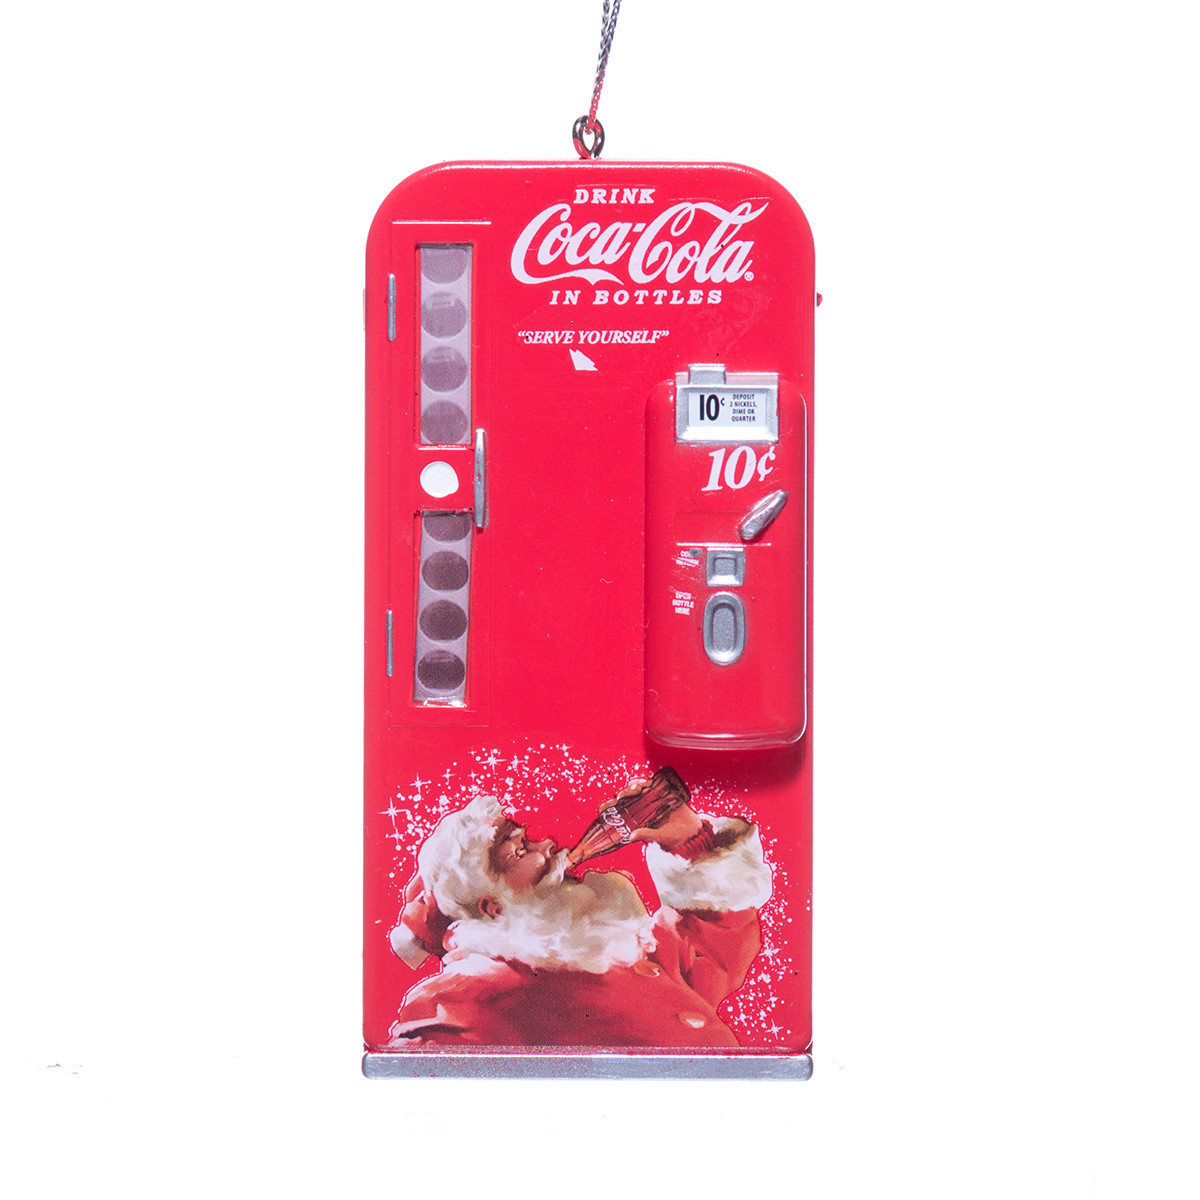 An analysis of coca colas new vending machine